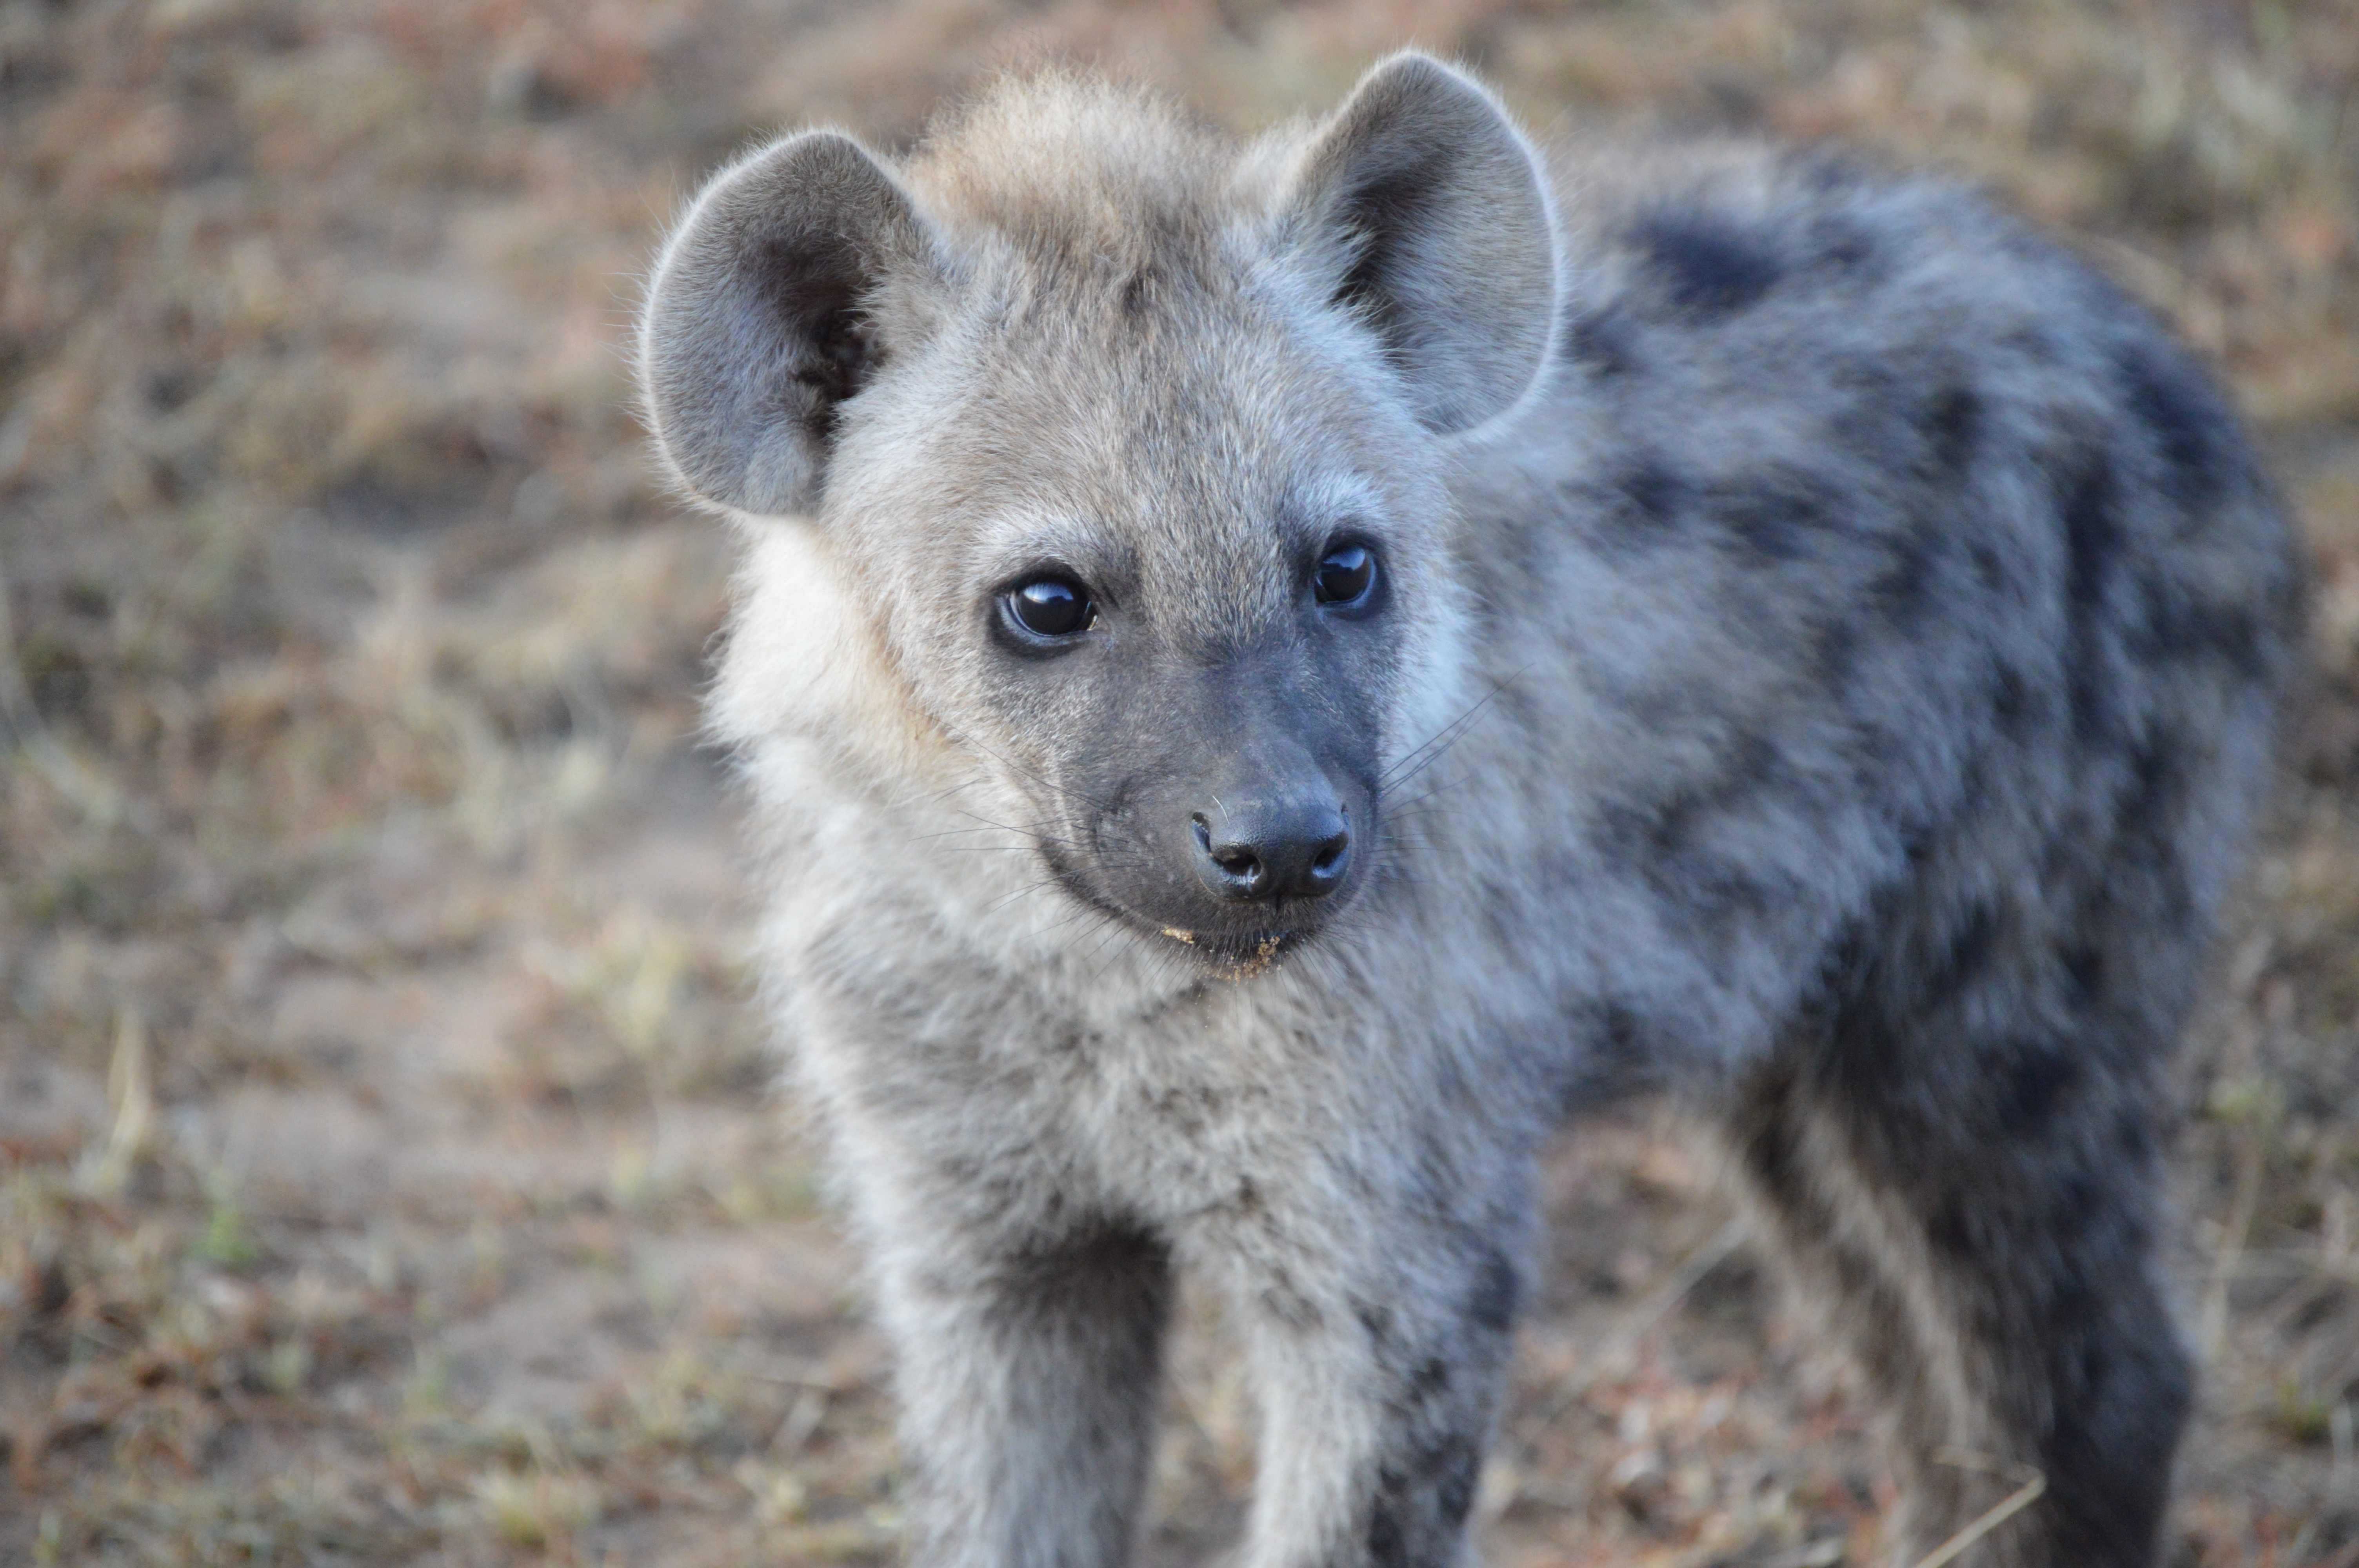 Juvenile spotted hyena (Photo credit: Matthew Farr)